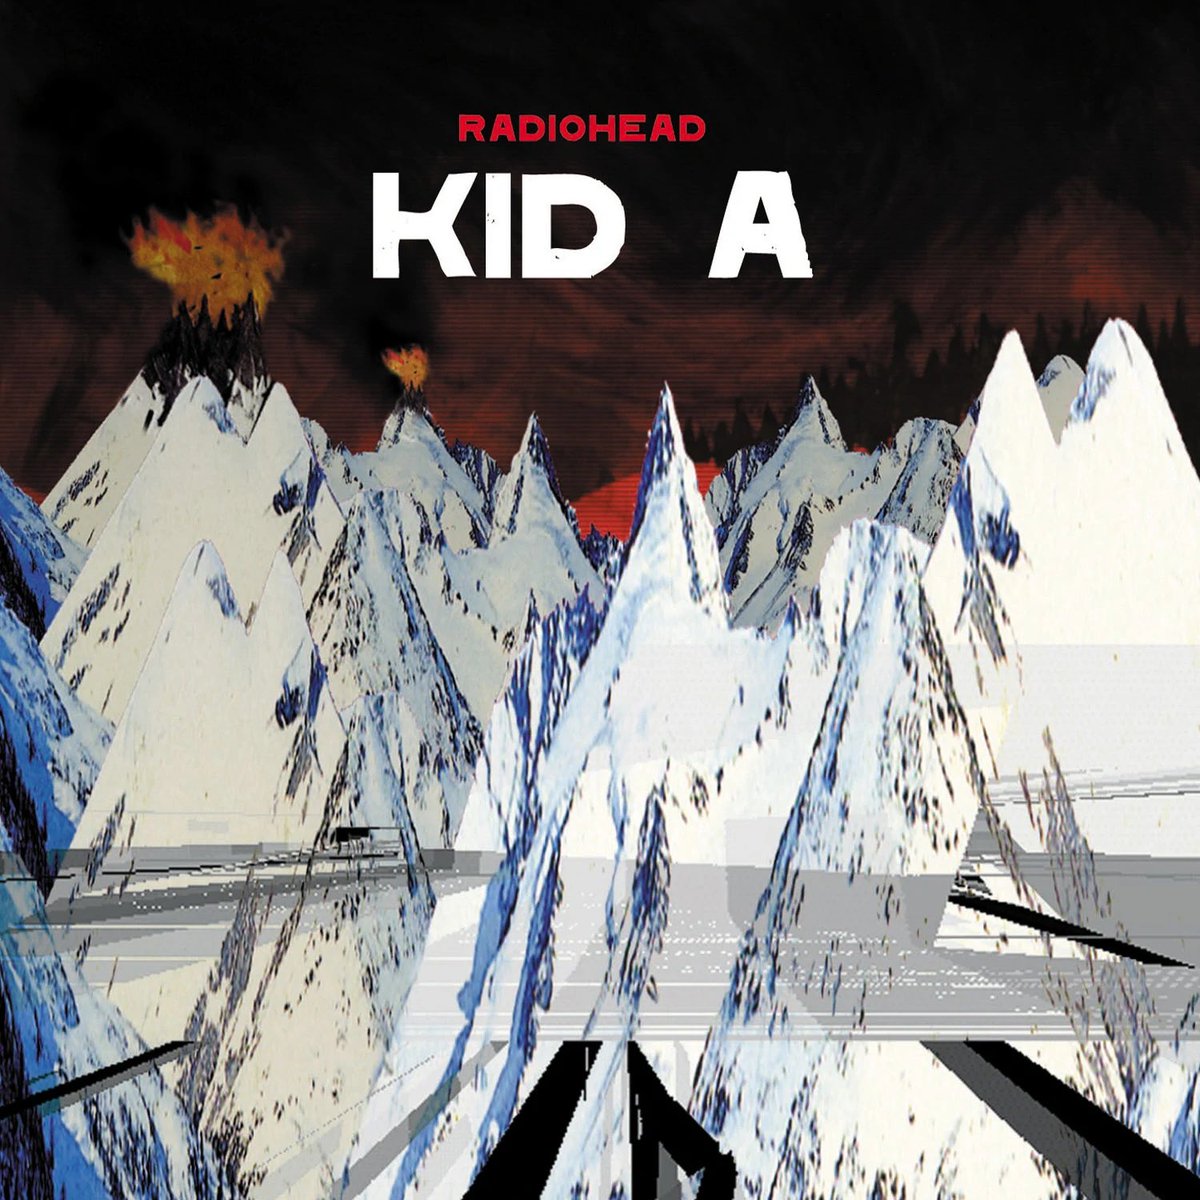 Honourable mentions: Kid A- RadioheadSkankonia- OutKastMMLP- EminemSupreme Clientele- Ghostface Killah